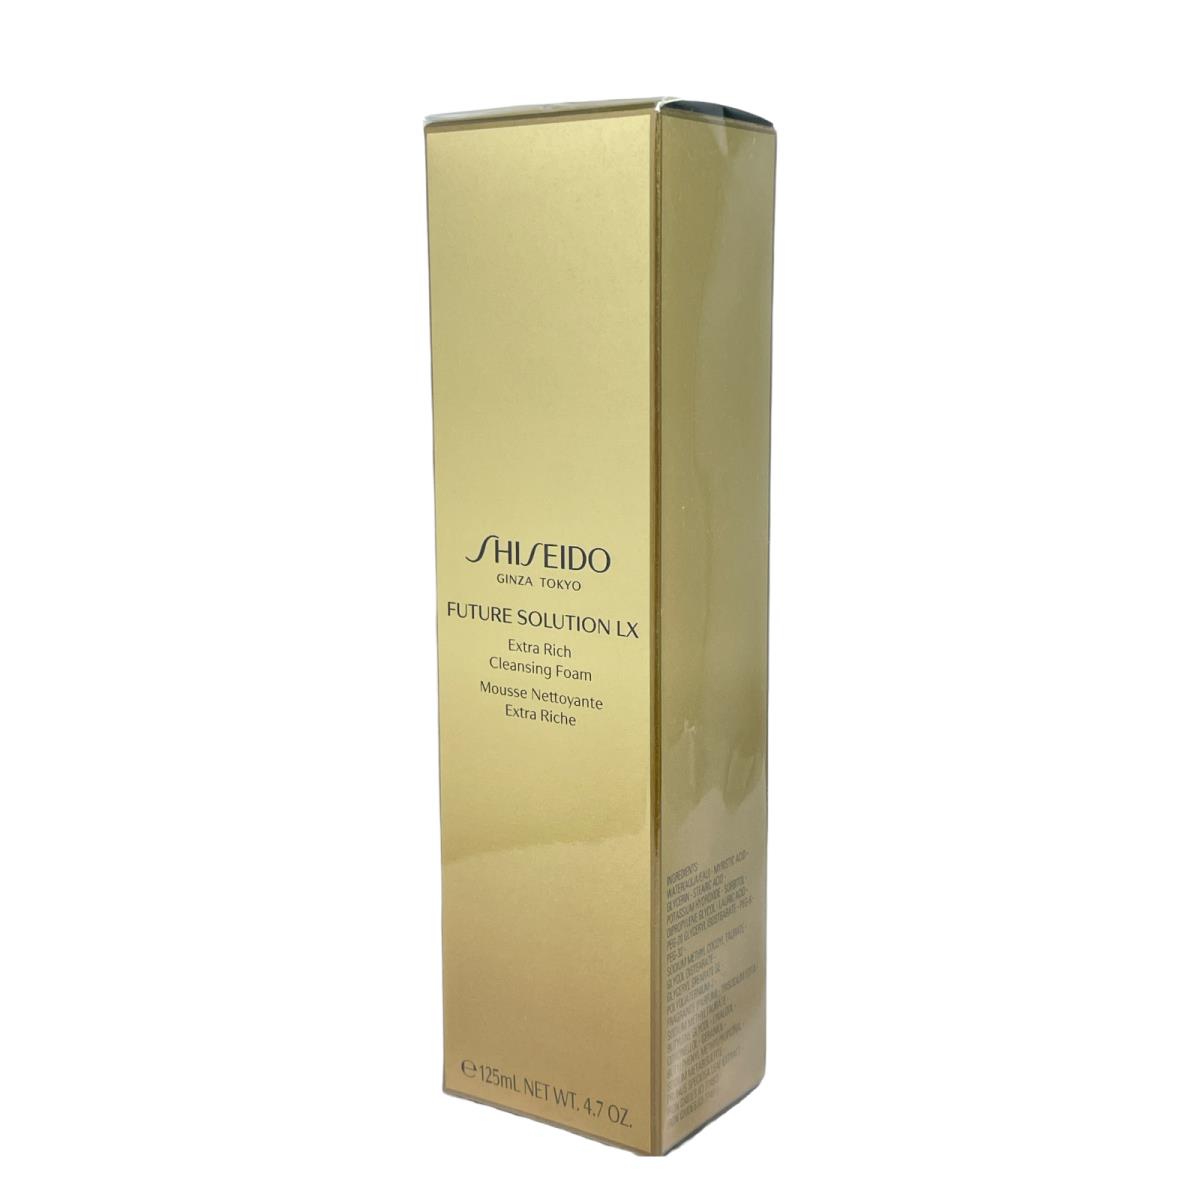 Shiseido Ginza Tokyo Future Solution LX Extra Rich Cleansing Foam 125ml/4.7oz